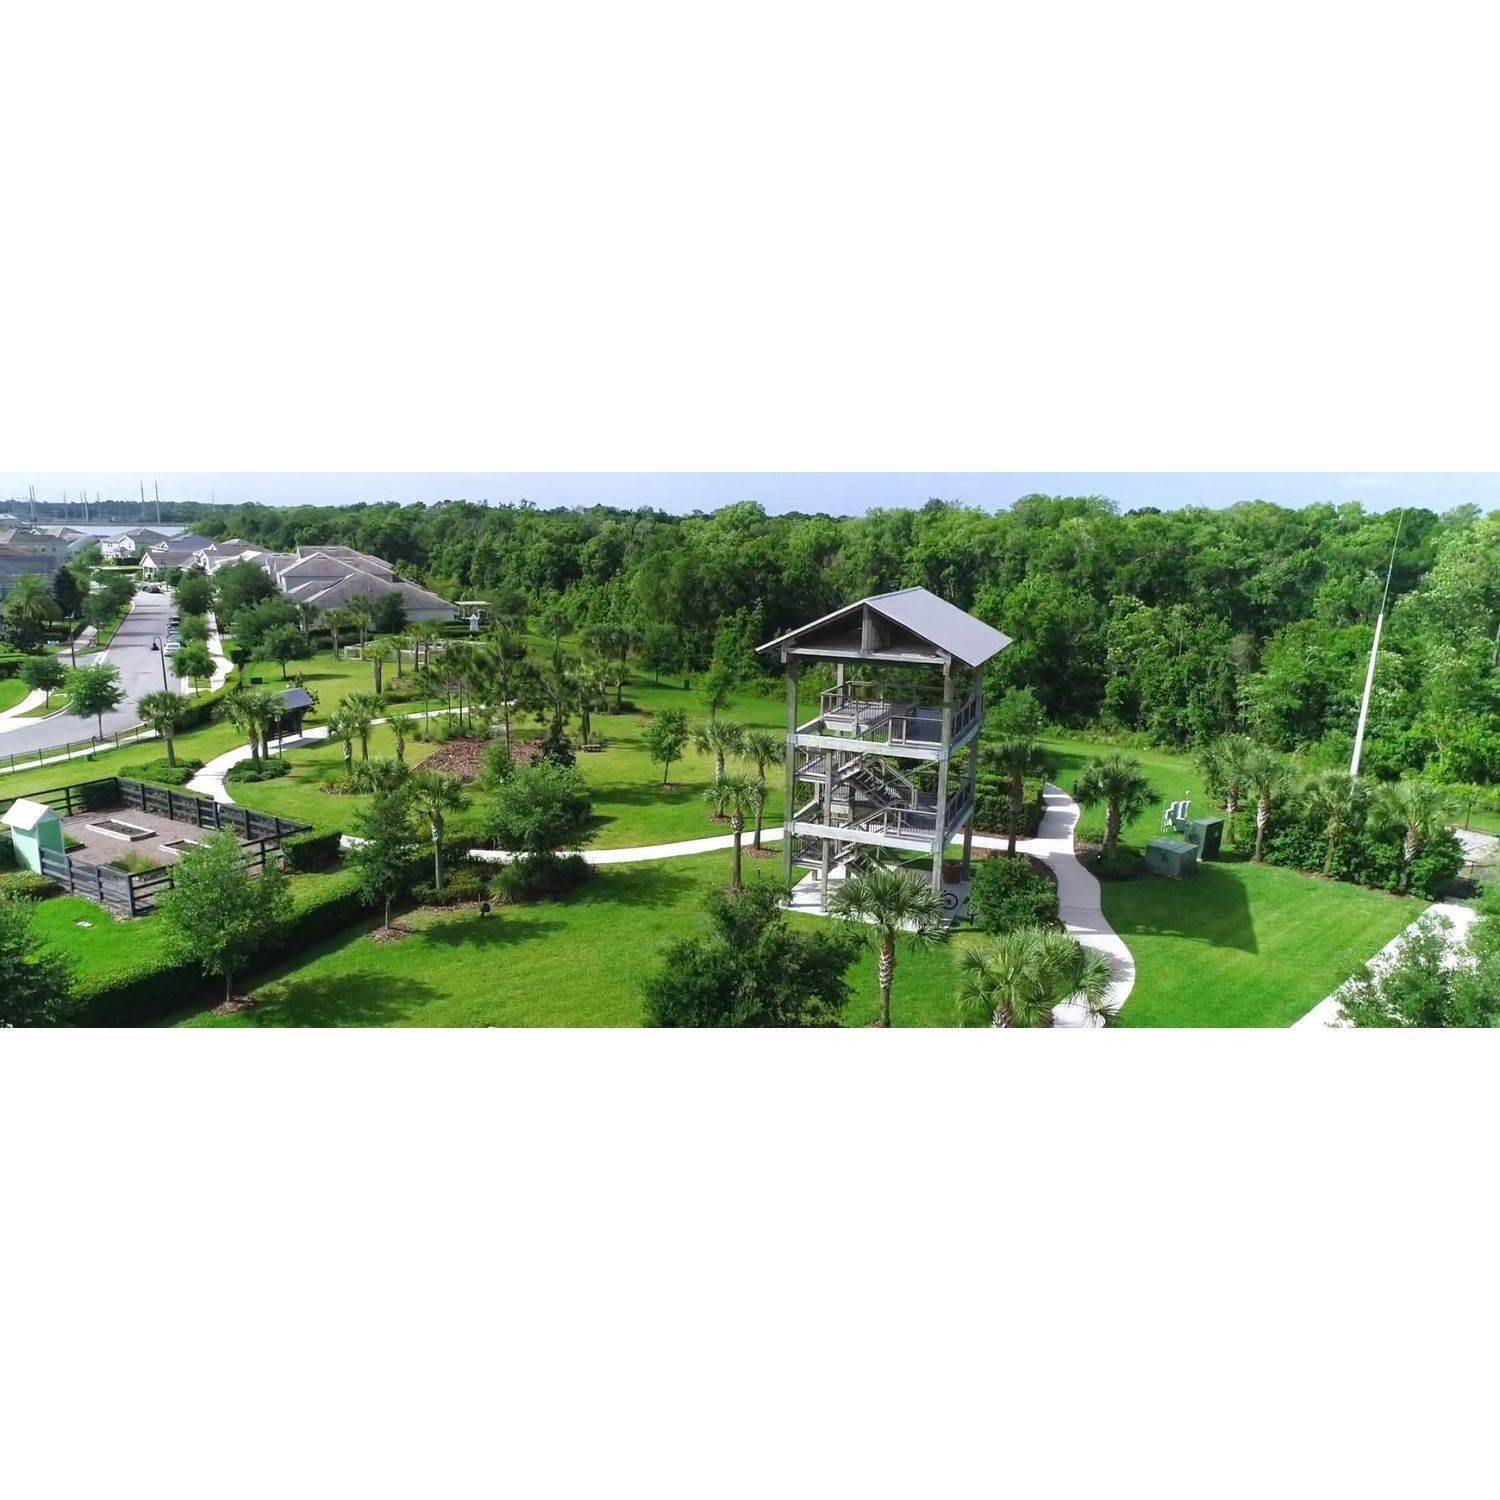 3. Storey Park - Innovation Manor Collection building at 10914 History Avenue, Orlando, FL 32832